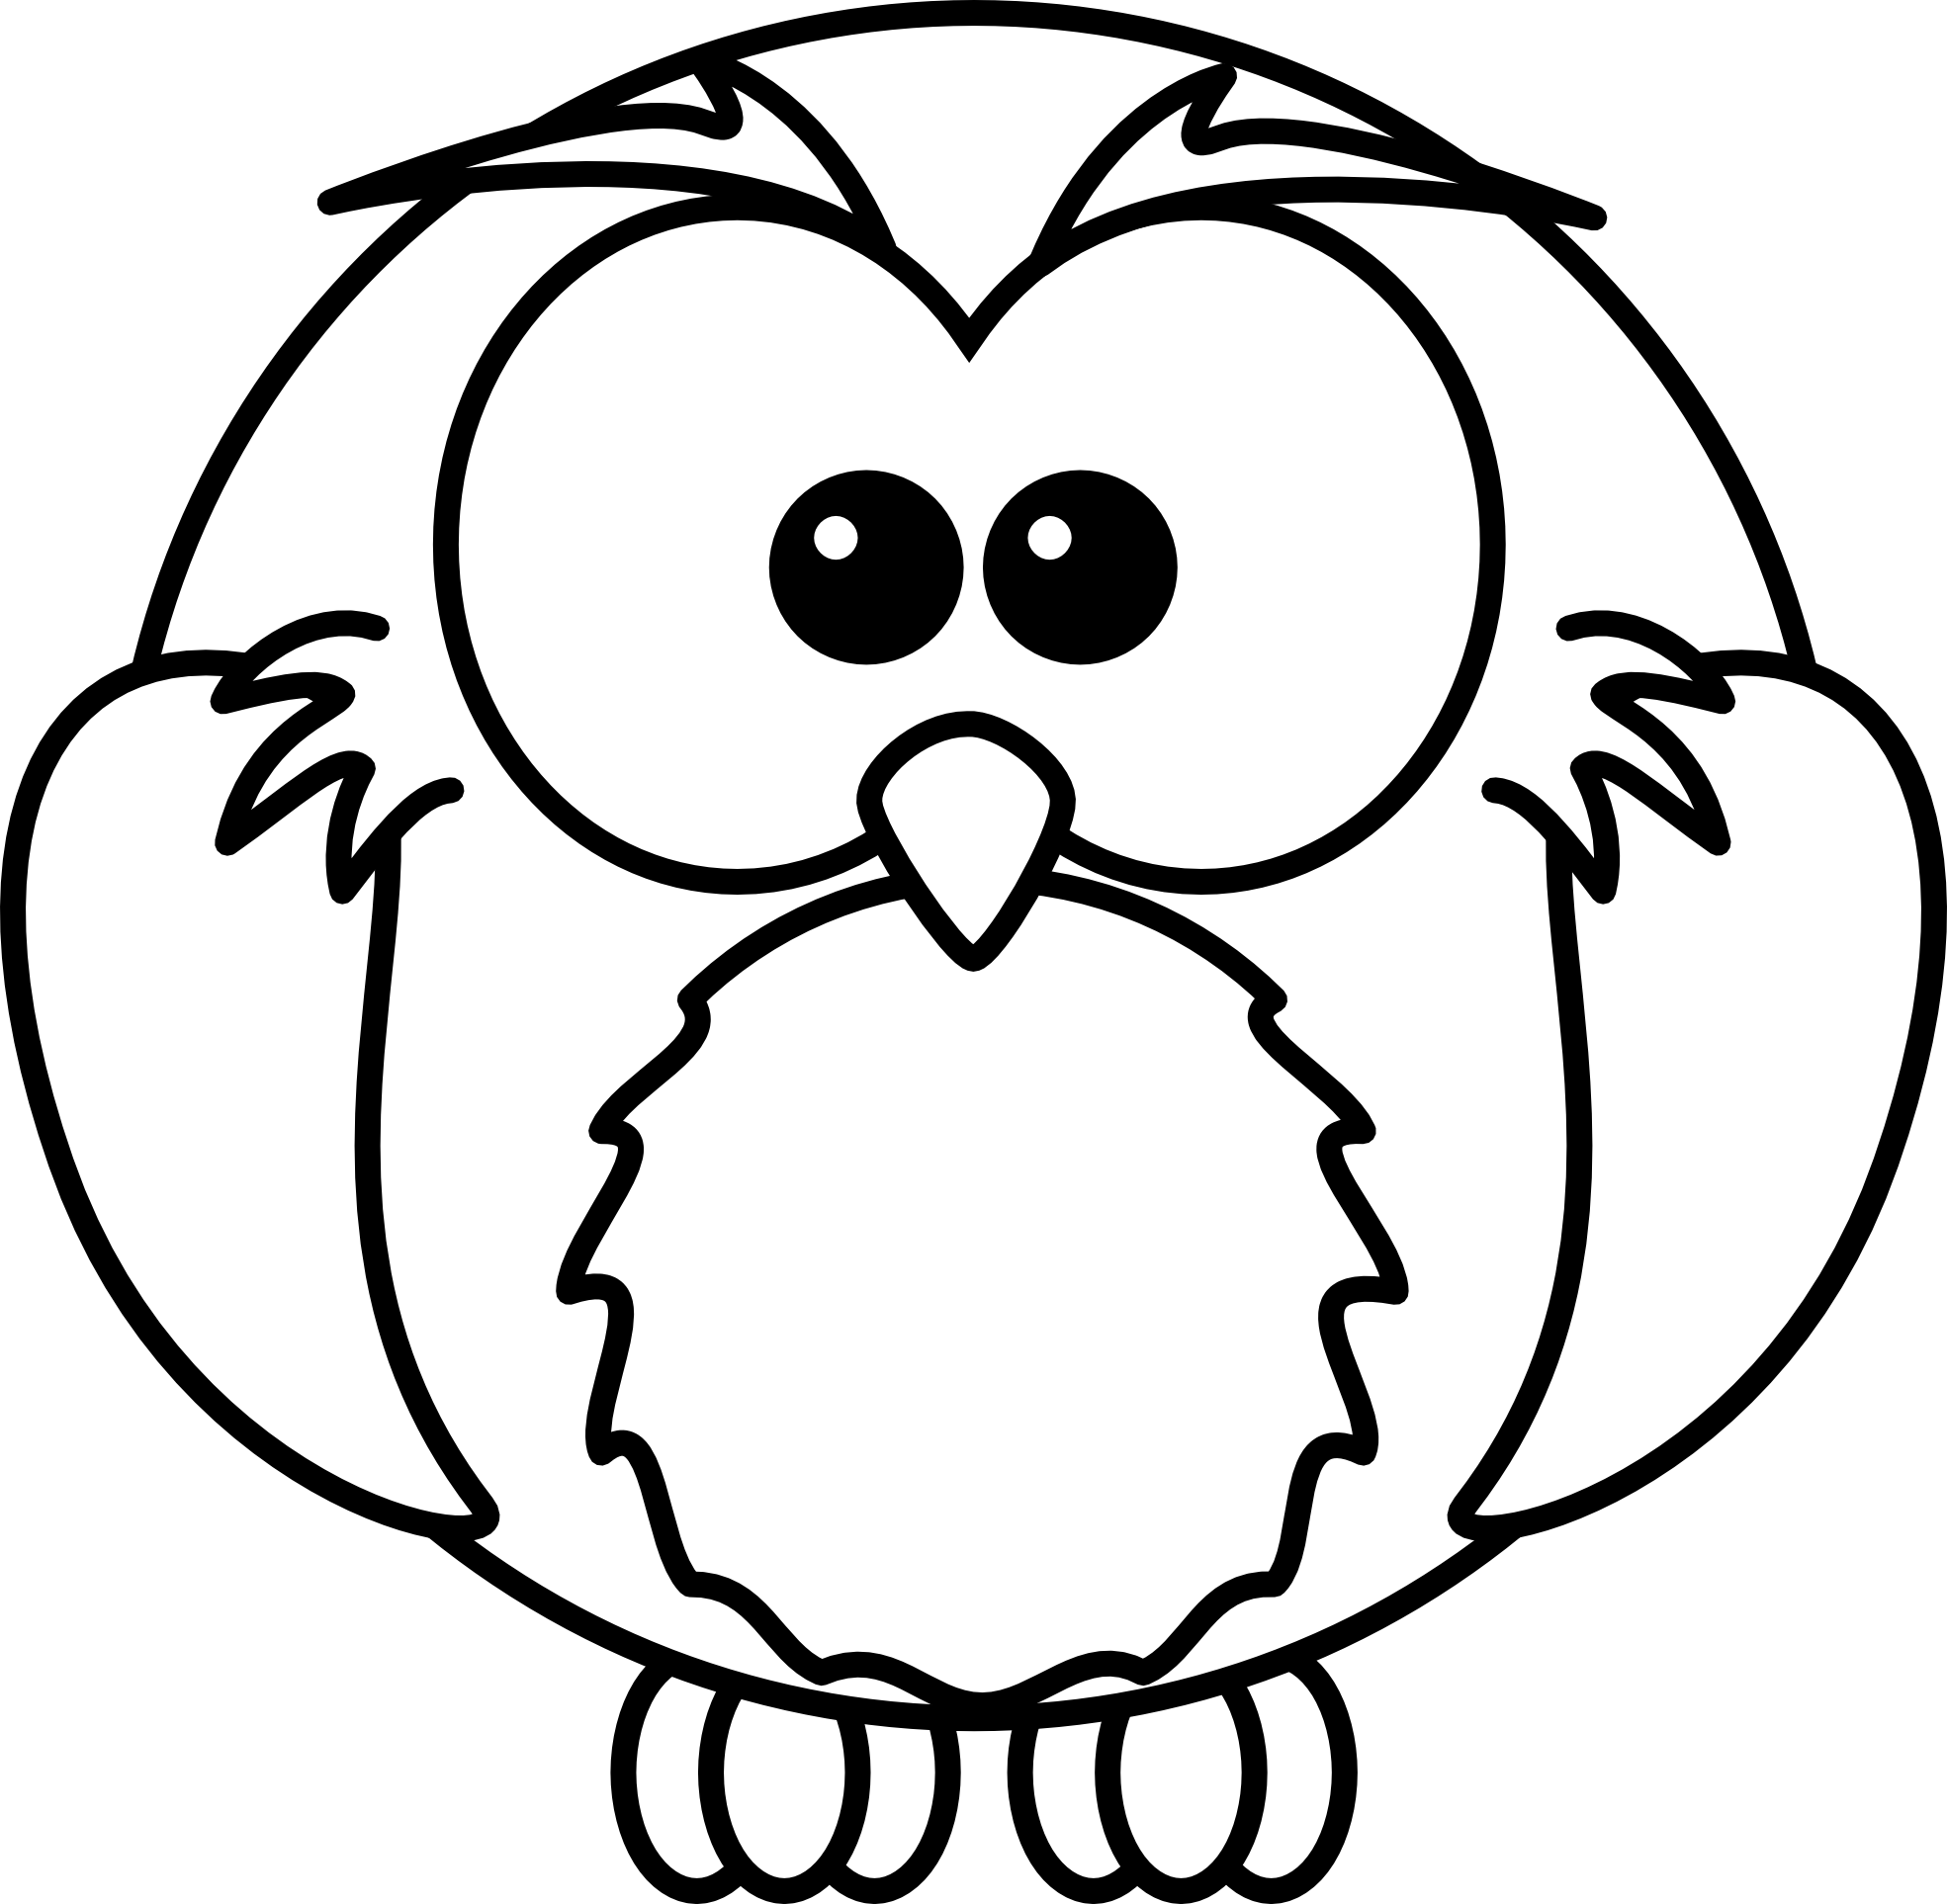 Cute owl black and white clipart - ClipartFox